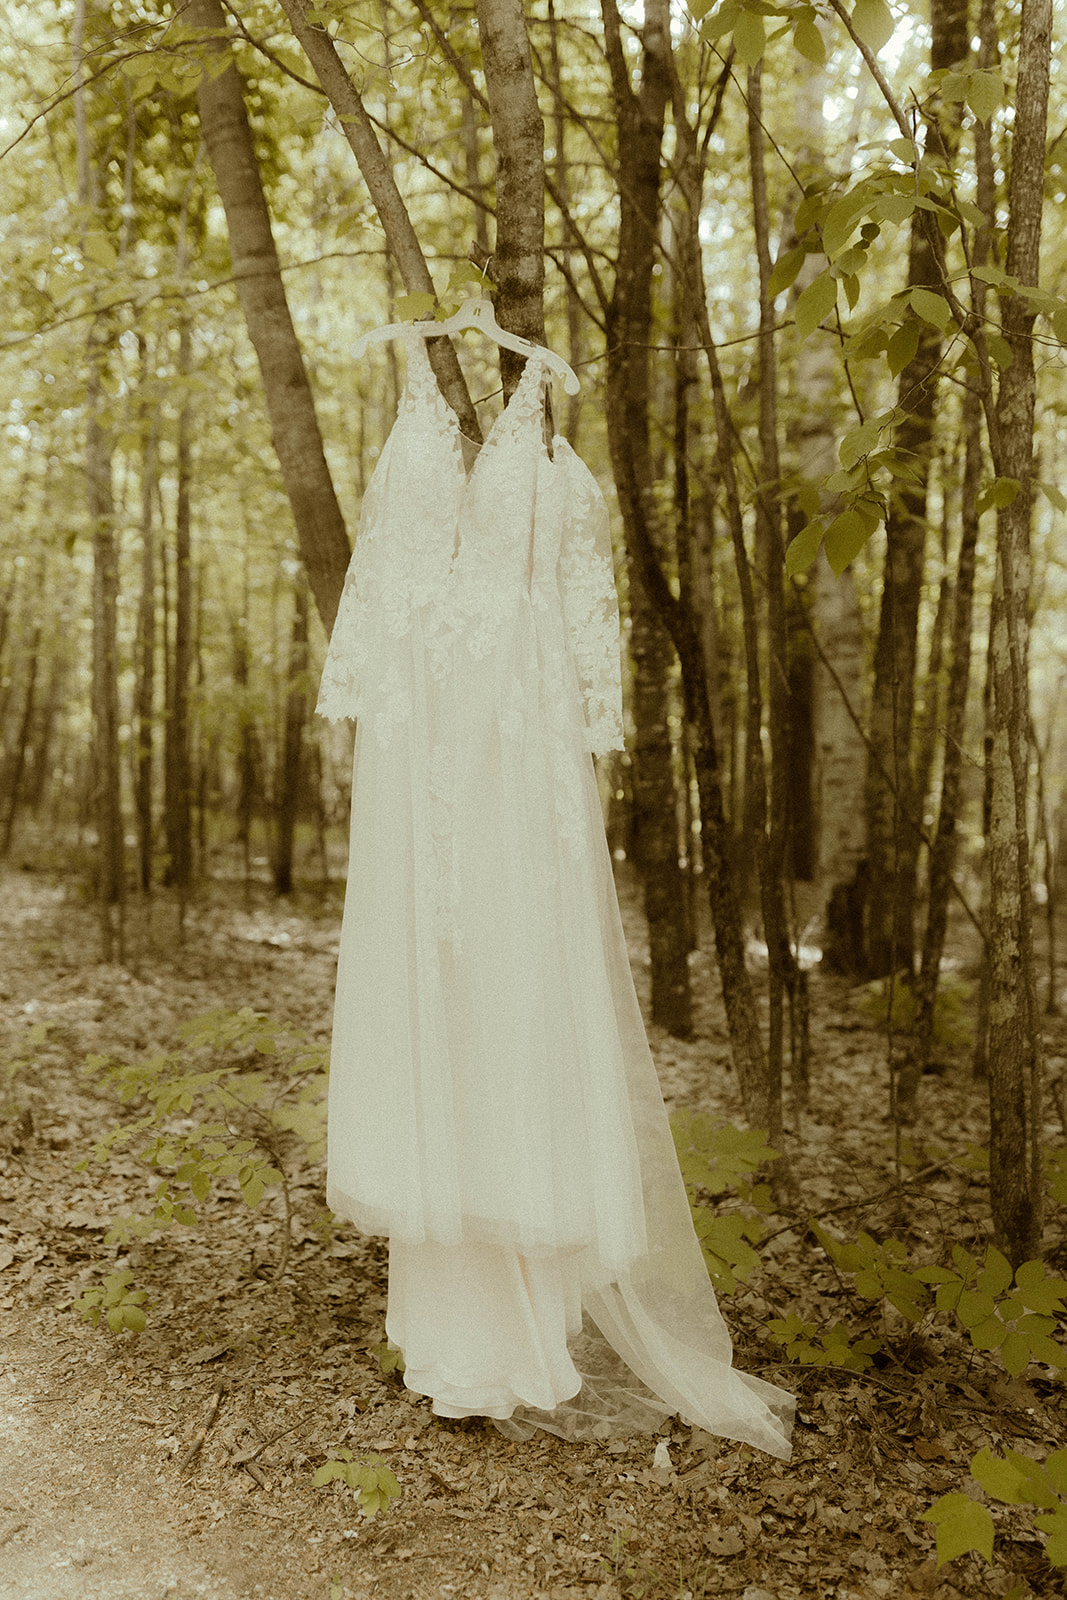 Elegant wedding dress hung in the stunning Adirondack nature